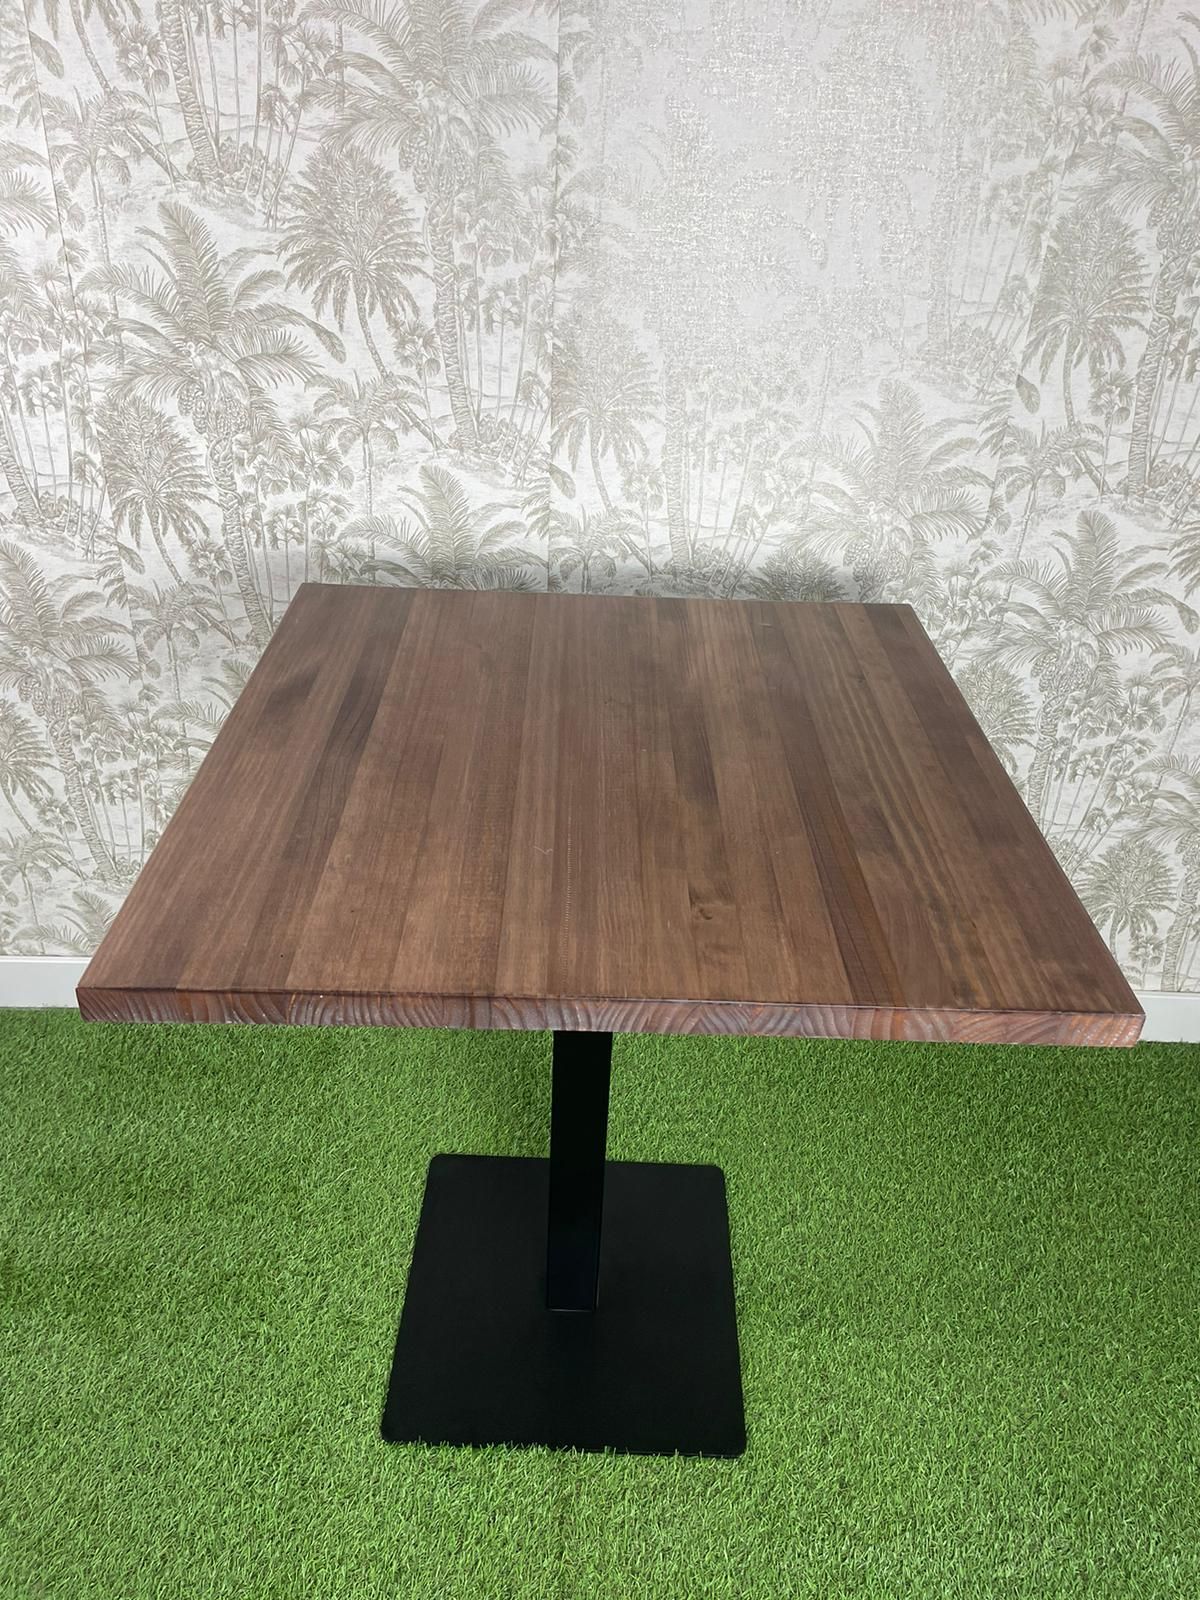 mesa de madera natural barnizado color wengue